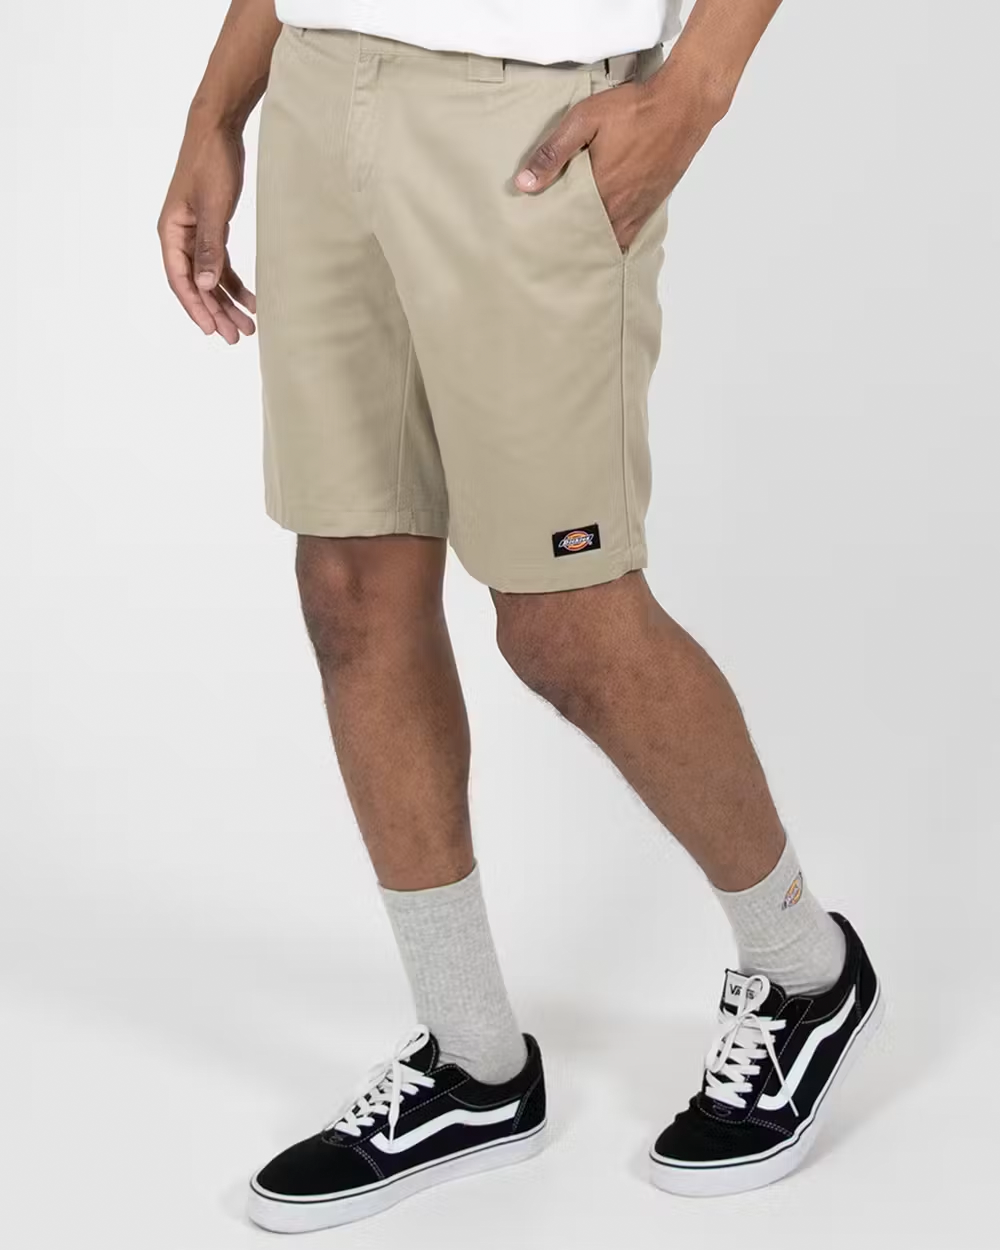 DICKIES 872 Slim Fit Shorts - Khaki - VENUE.